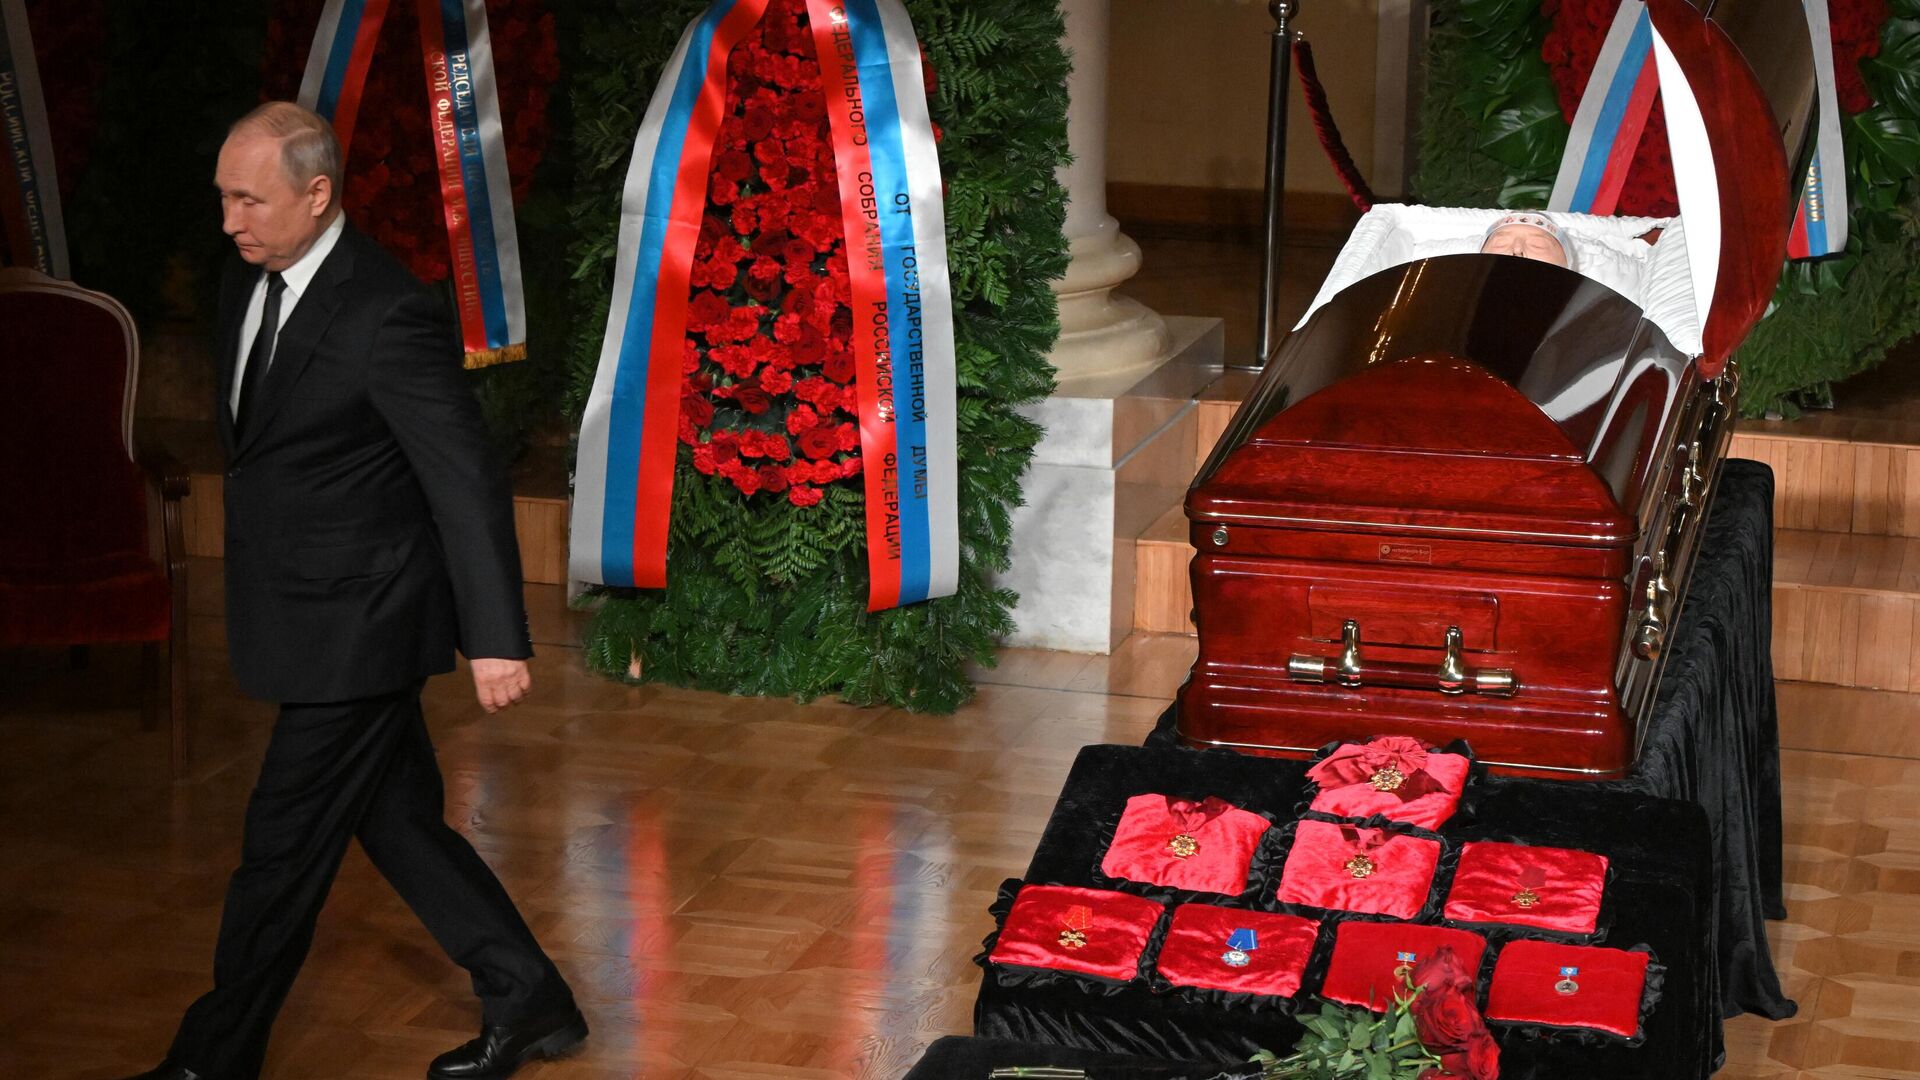 Похорони президента. Церемония прощания с Владимиром Жириновским.